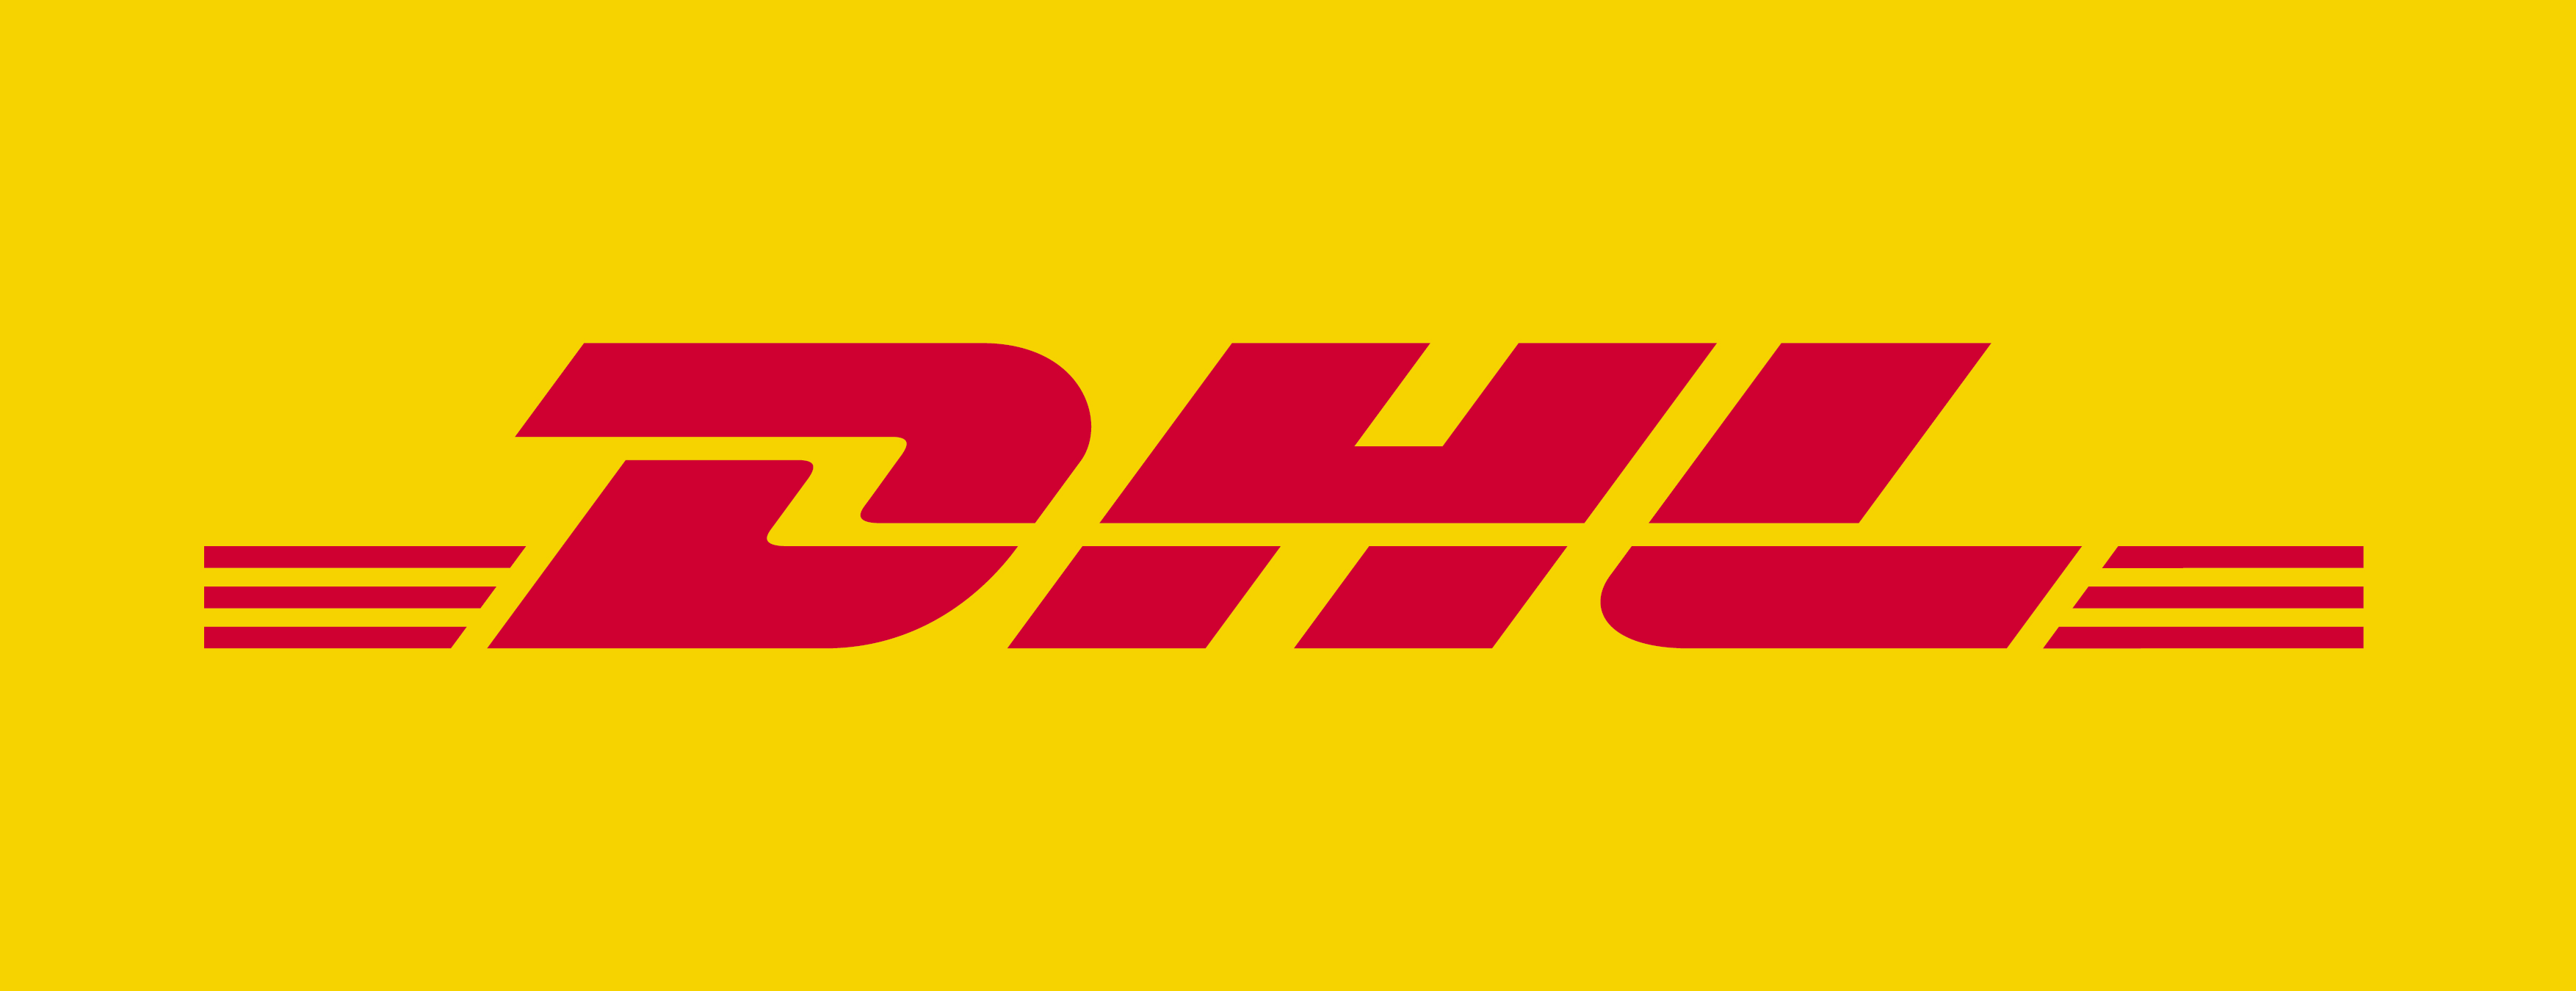 Dhl Logos - Dhl, Transparent background PNG HD thumbnail